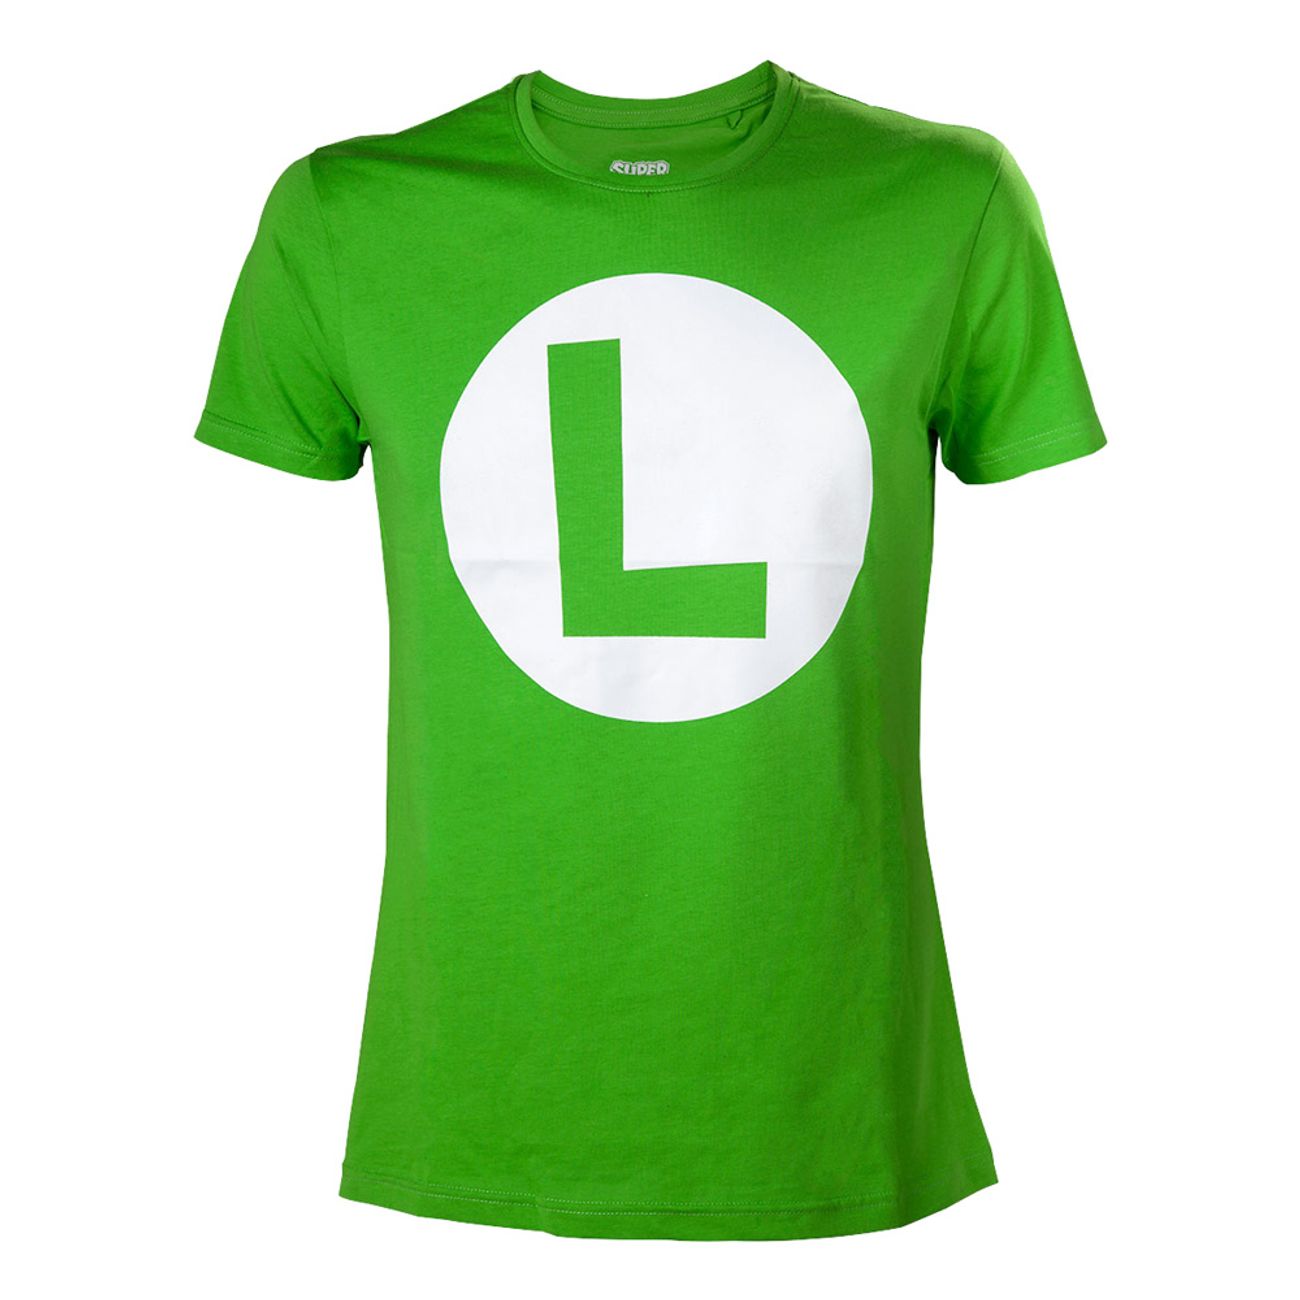 luigi-logo-t-shirt-1